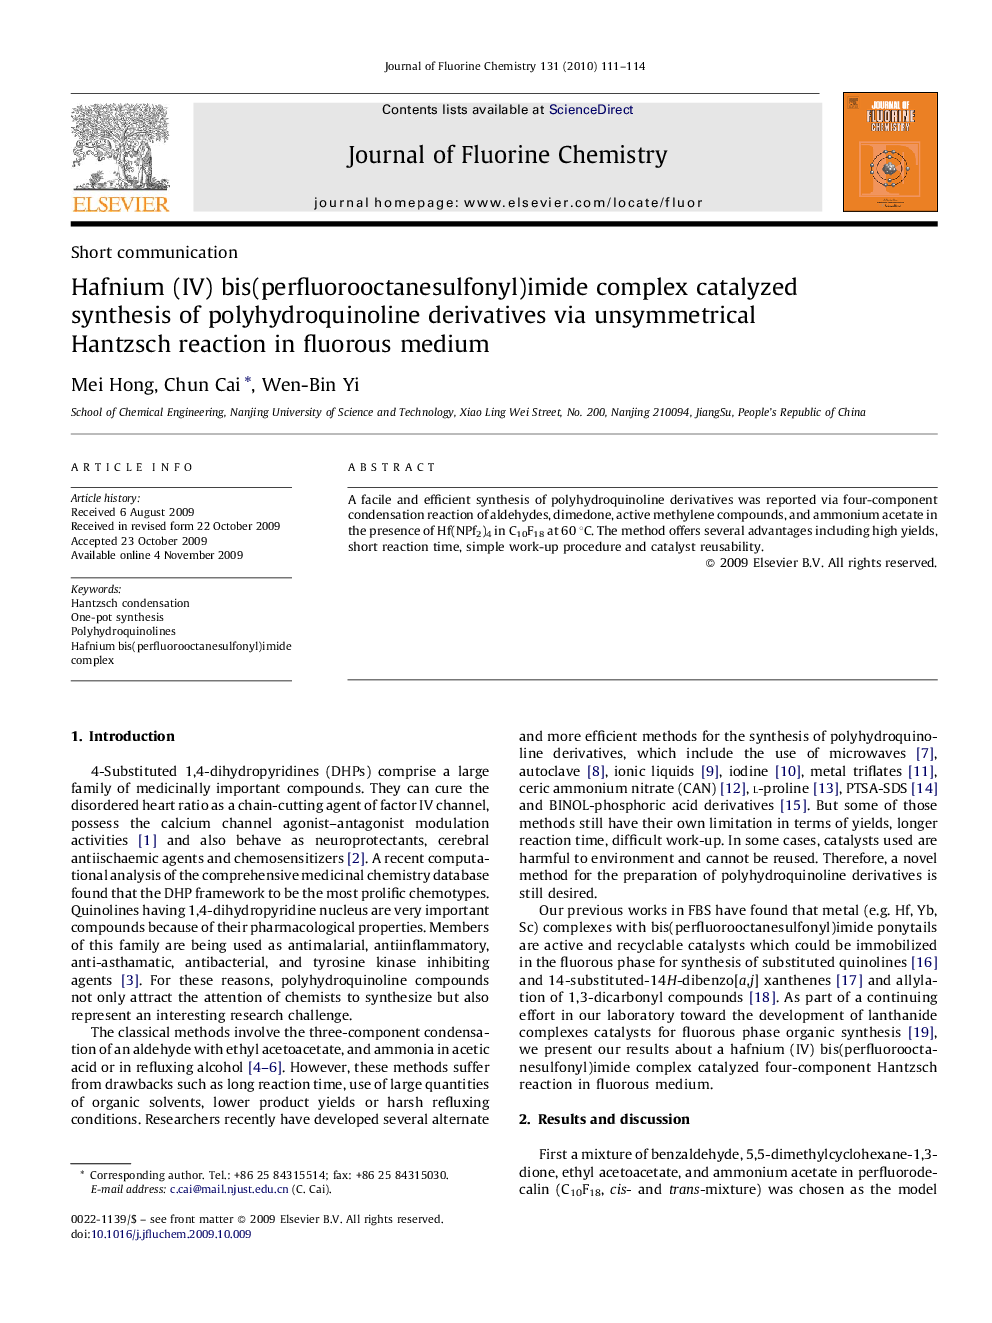 Hafnium (IV) bis(perfluorooctanesulfonyl)imide complex catalyzed synthesis of polyhydroquinoline derivatives via unsymmetrical Hantzsch reaction in fluorous medium